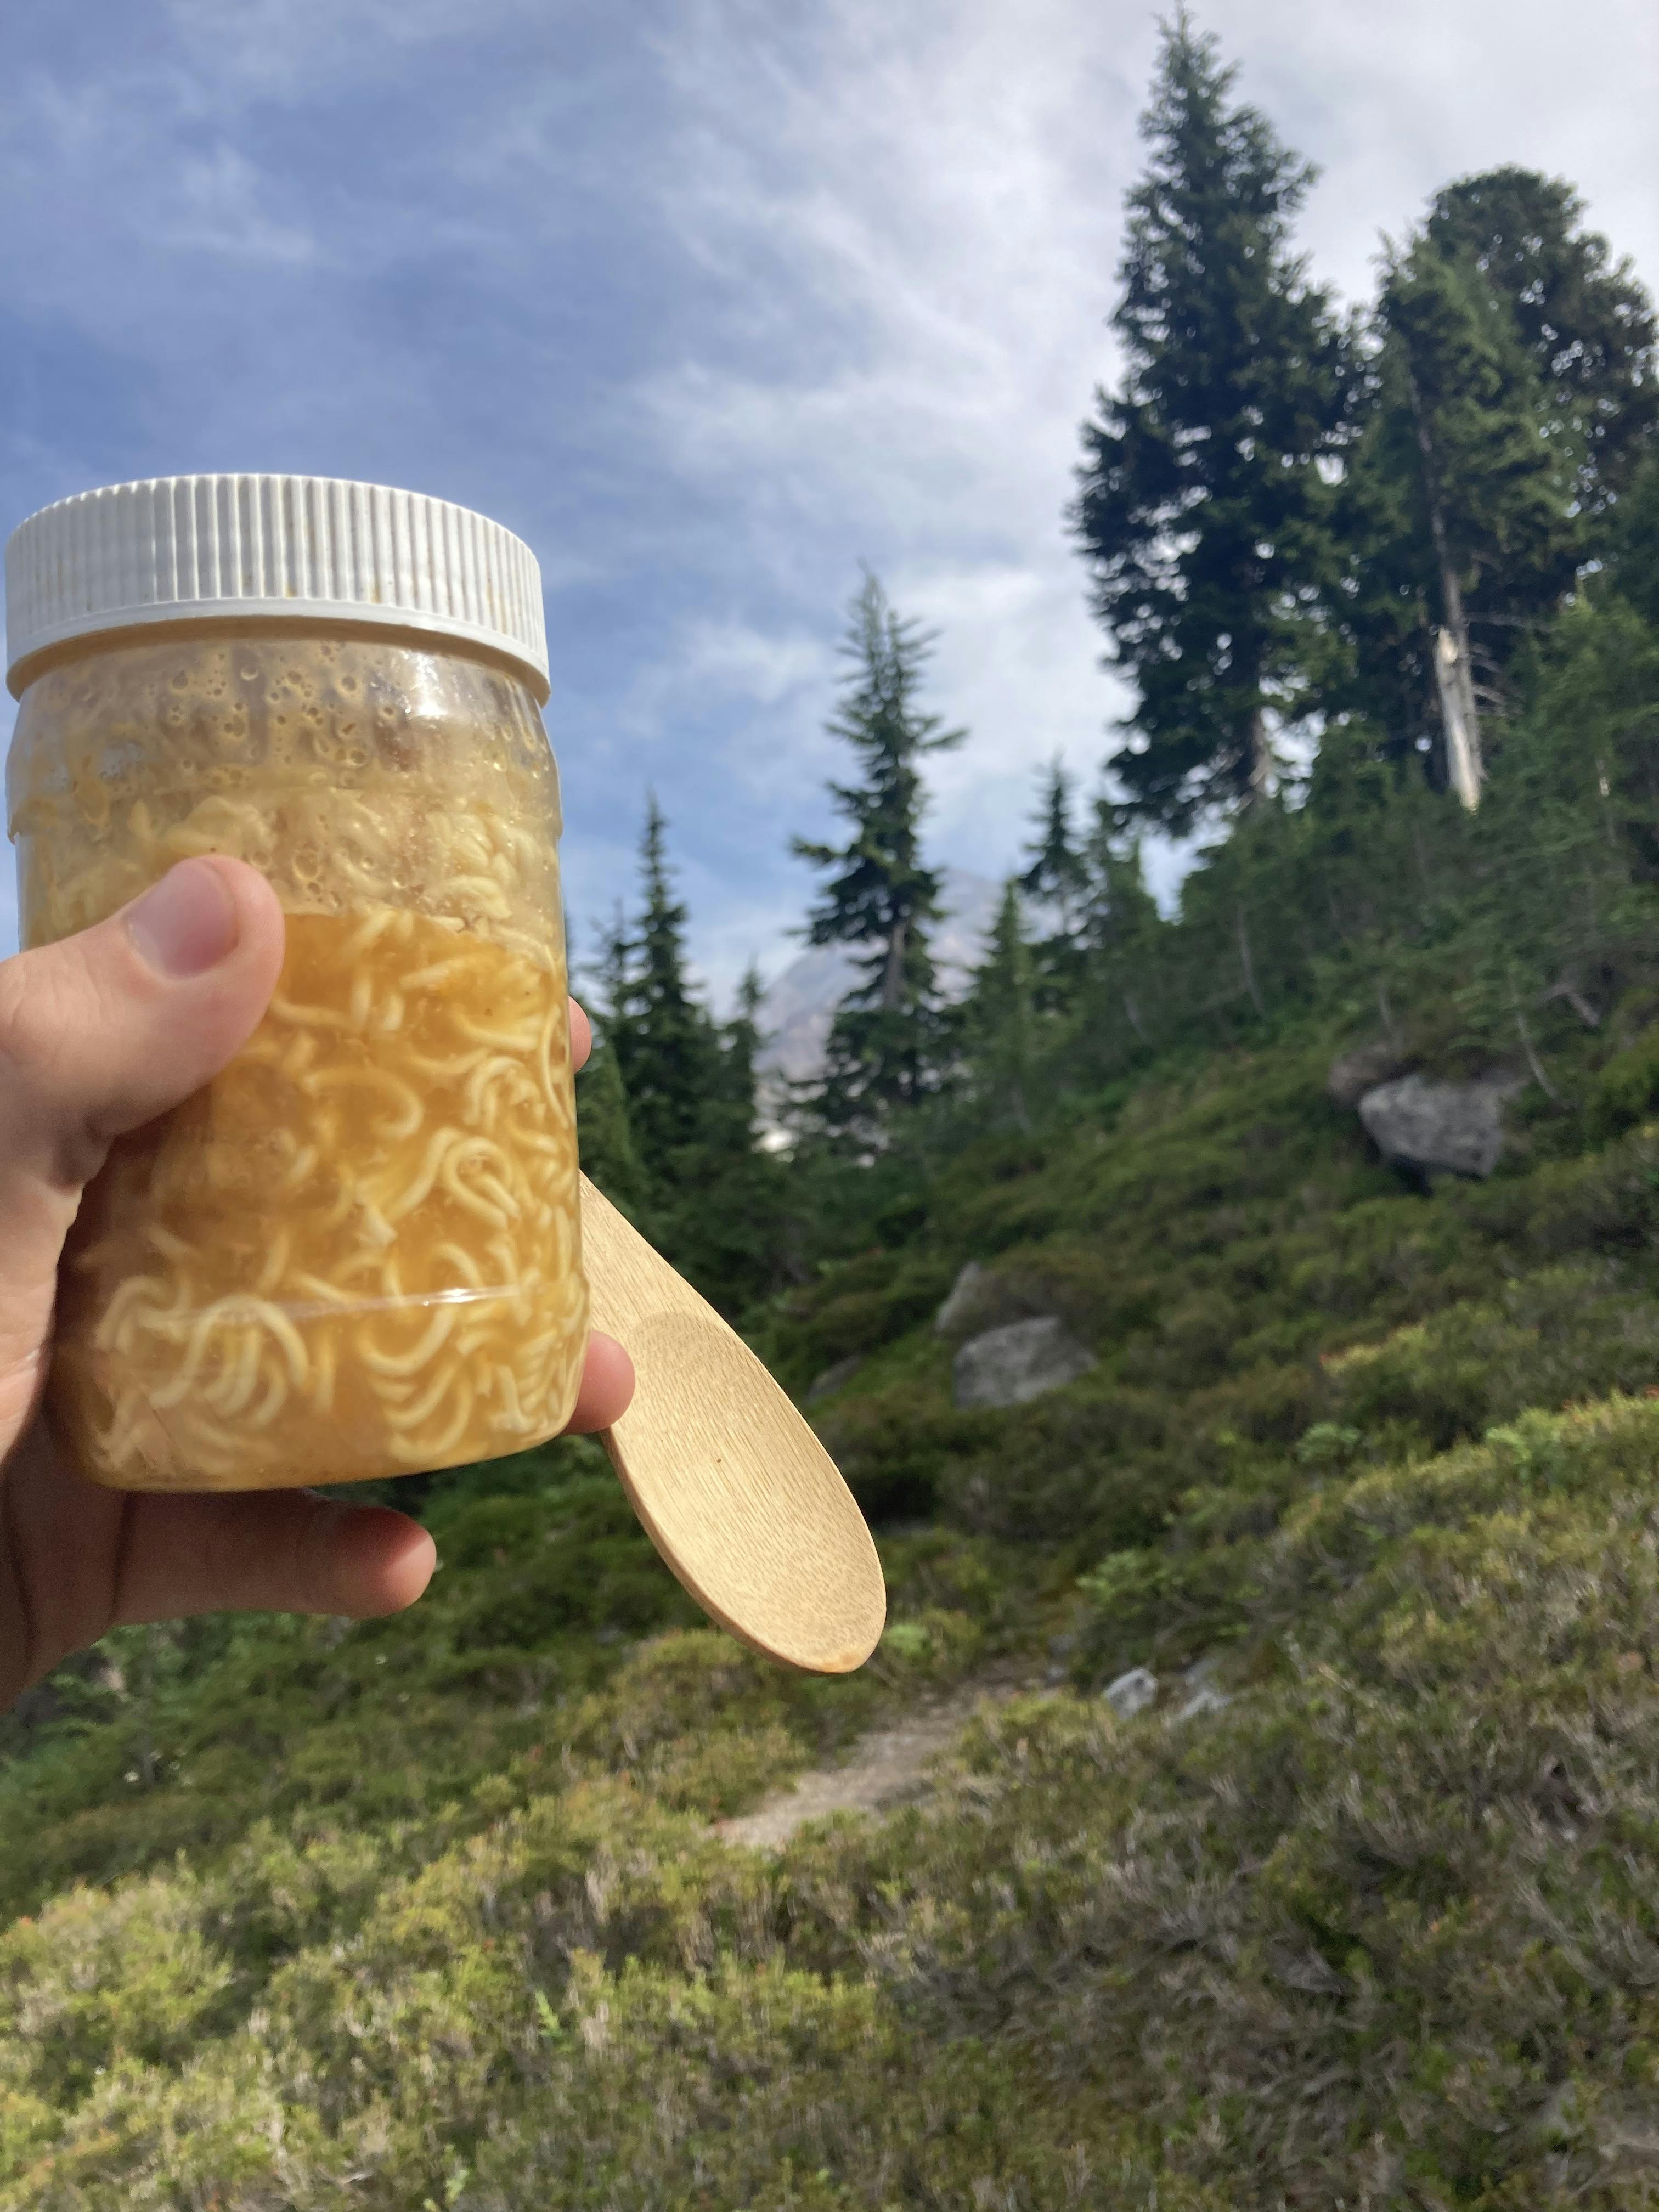 Wet ramen noodles in a plastic jar.